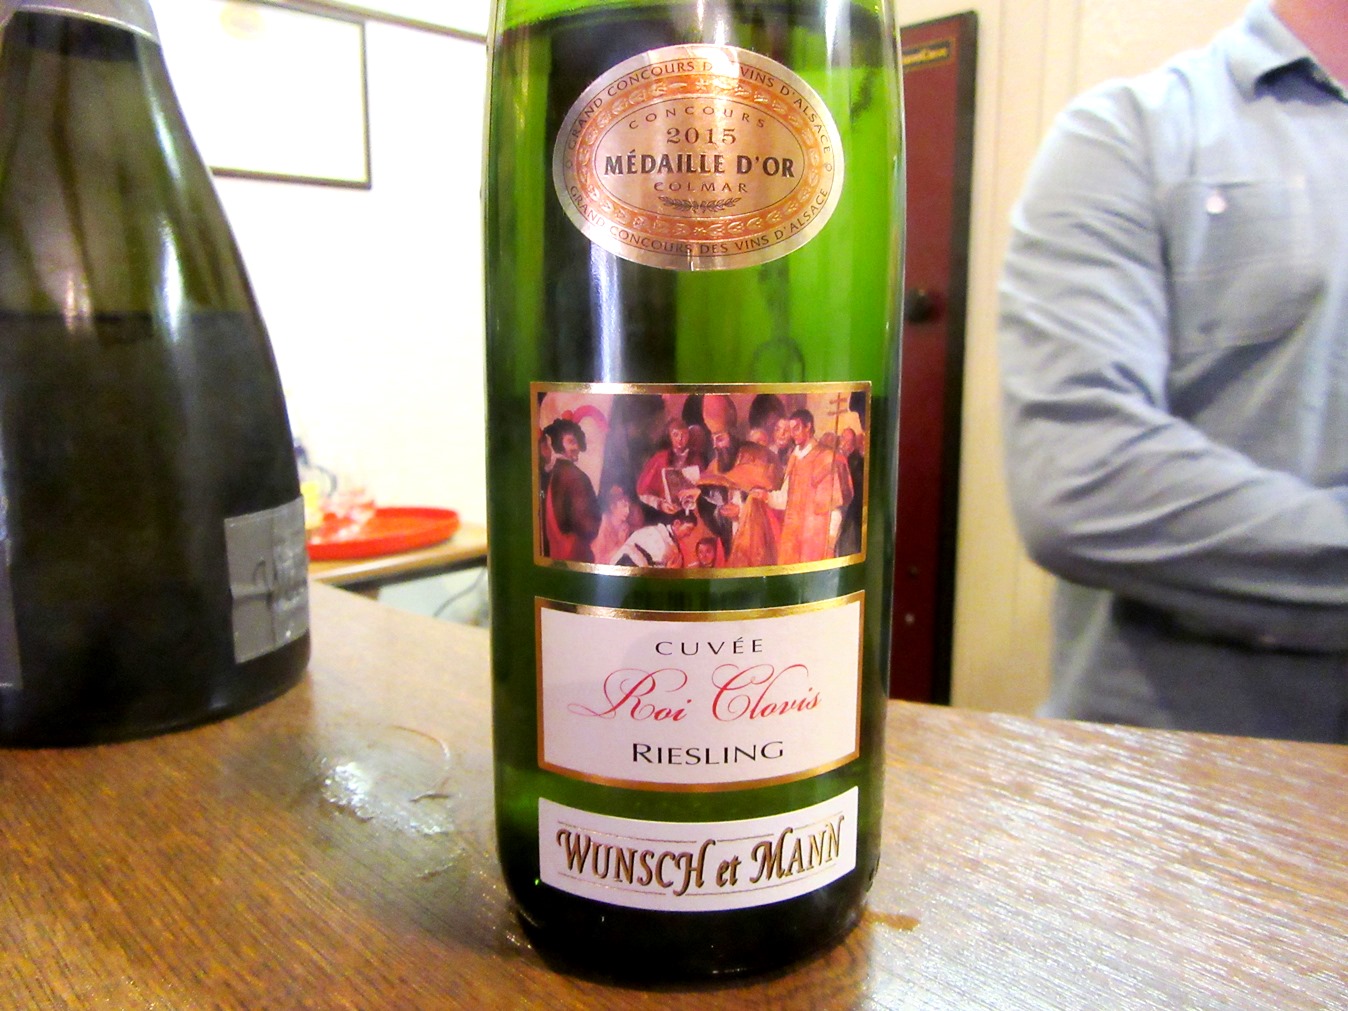 Wunsch et Mann, Cuvée Roi Clovis Reserve Riesling 2014, Alsace, France, Wine Casual